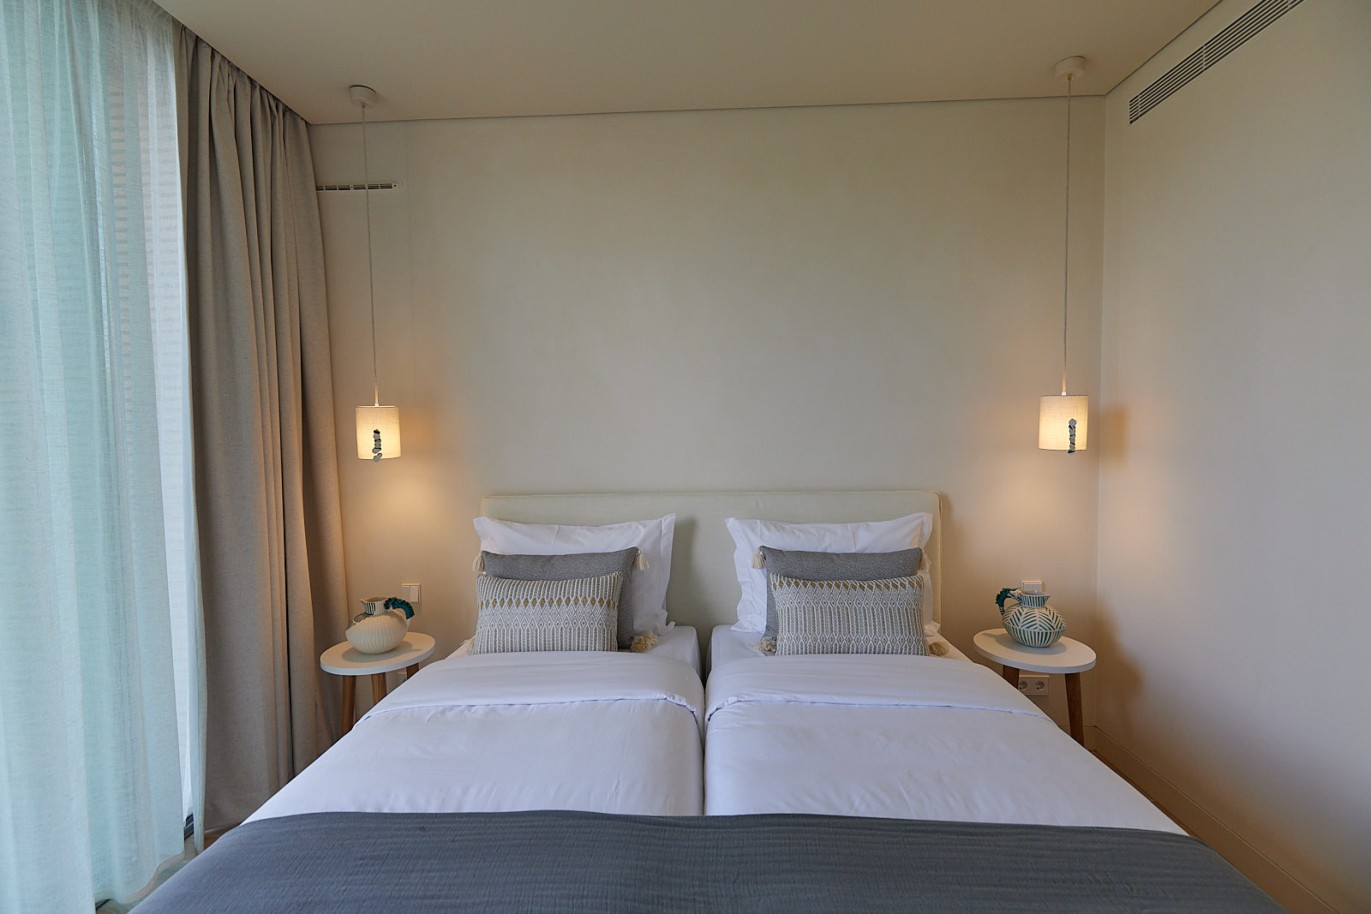 2 bedroom apartment in resort, for sale in Porches, Algarve_229247